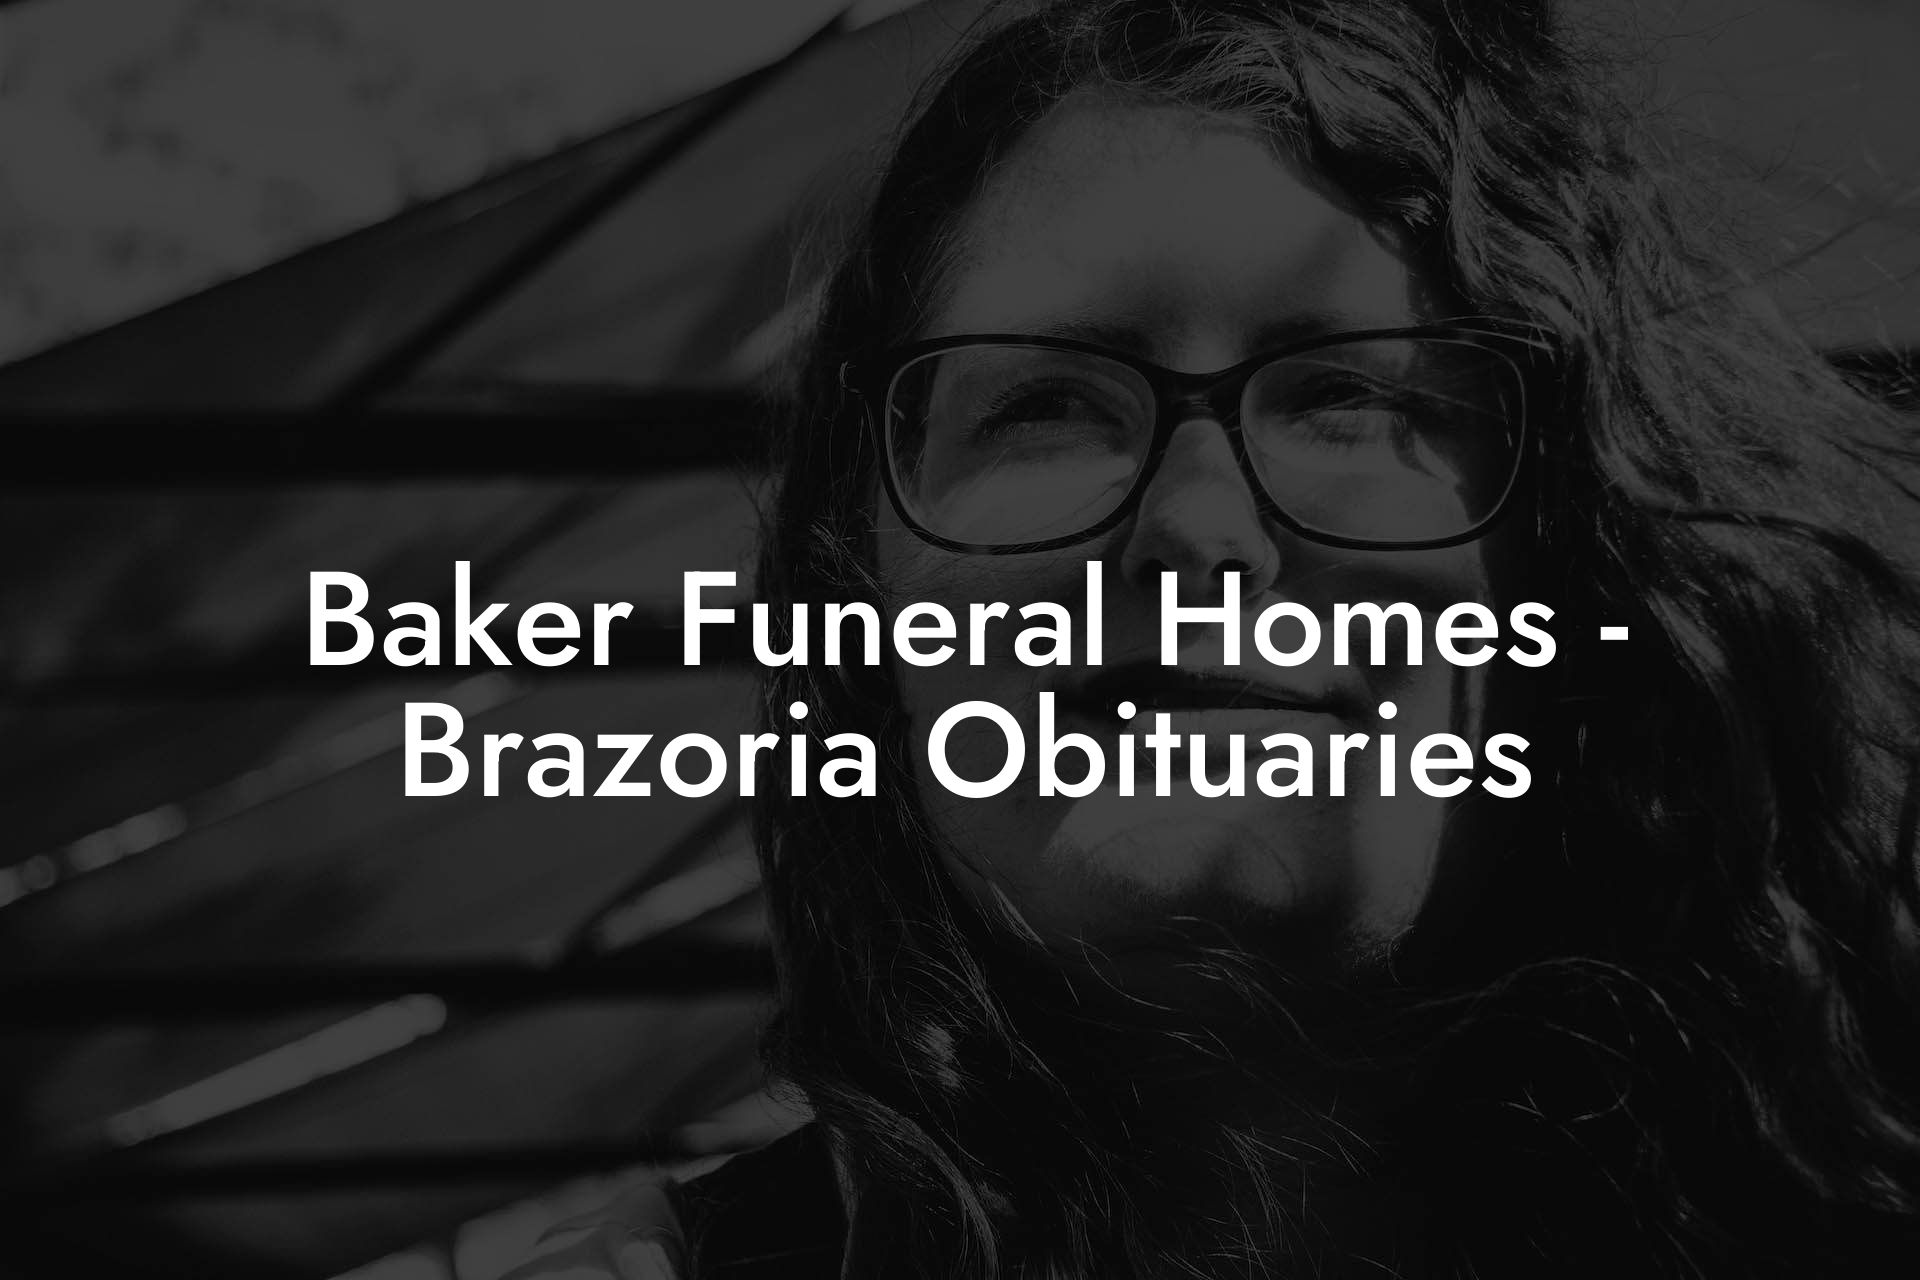 Baker Funeral Homes - Brazoria Obituaries